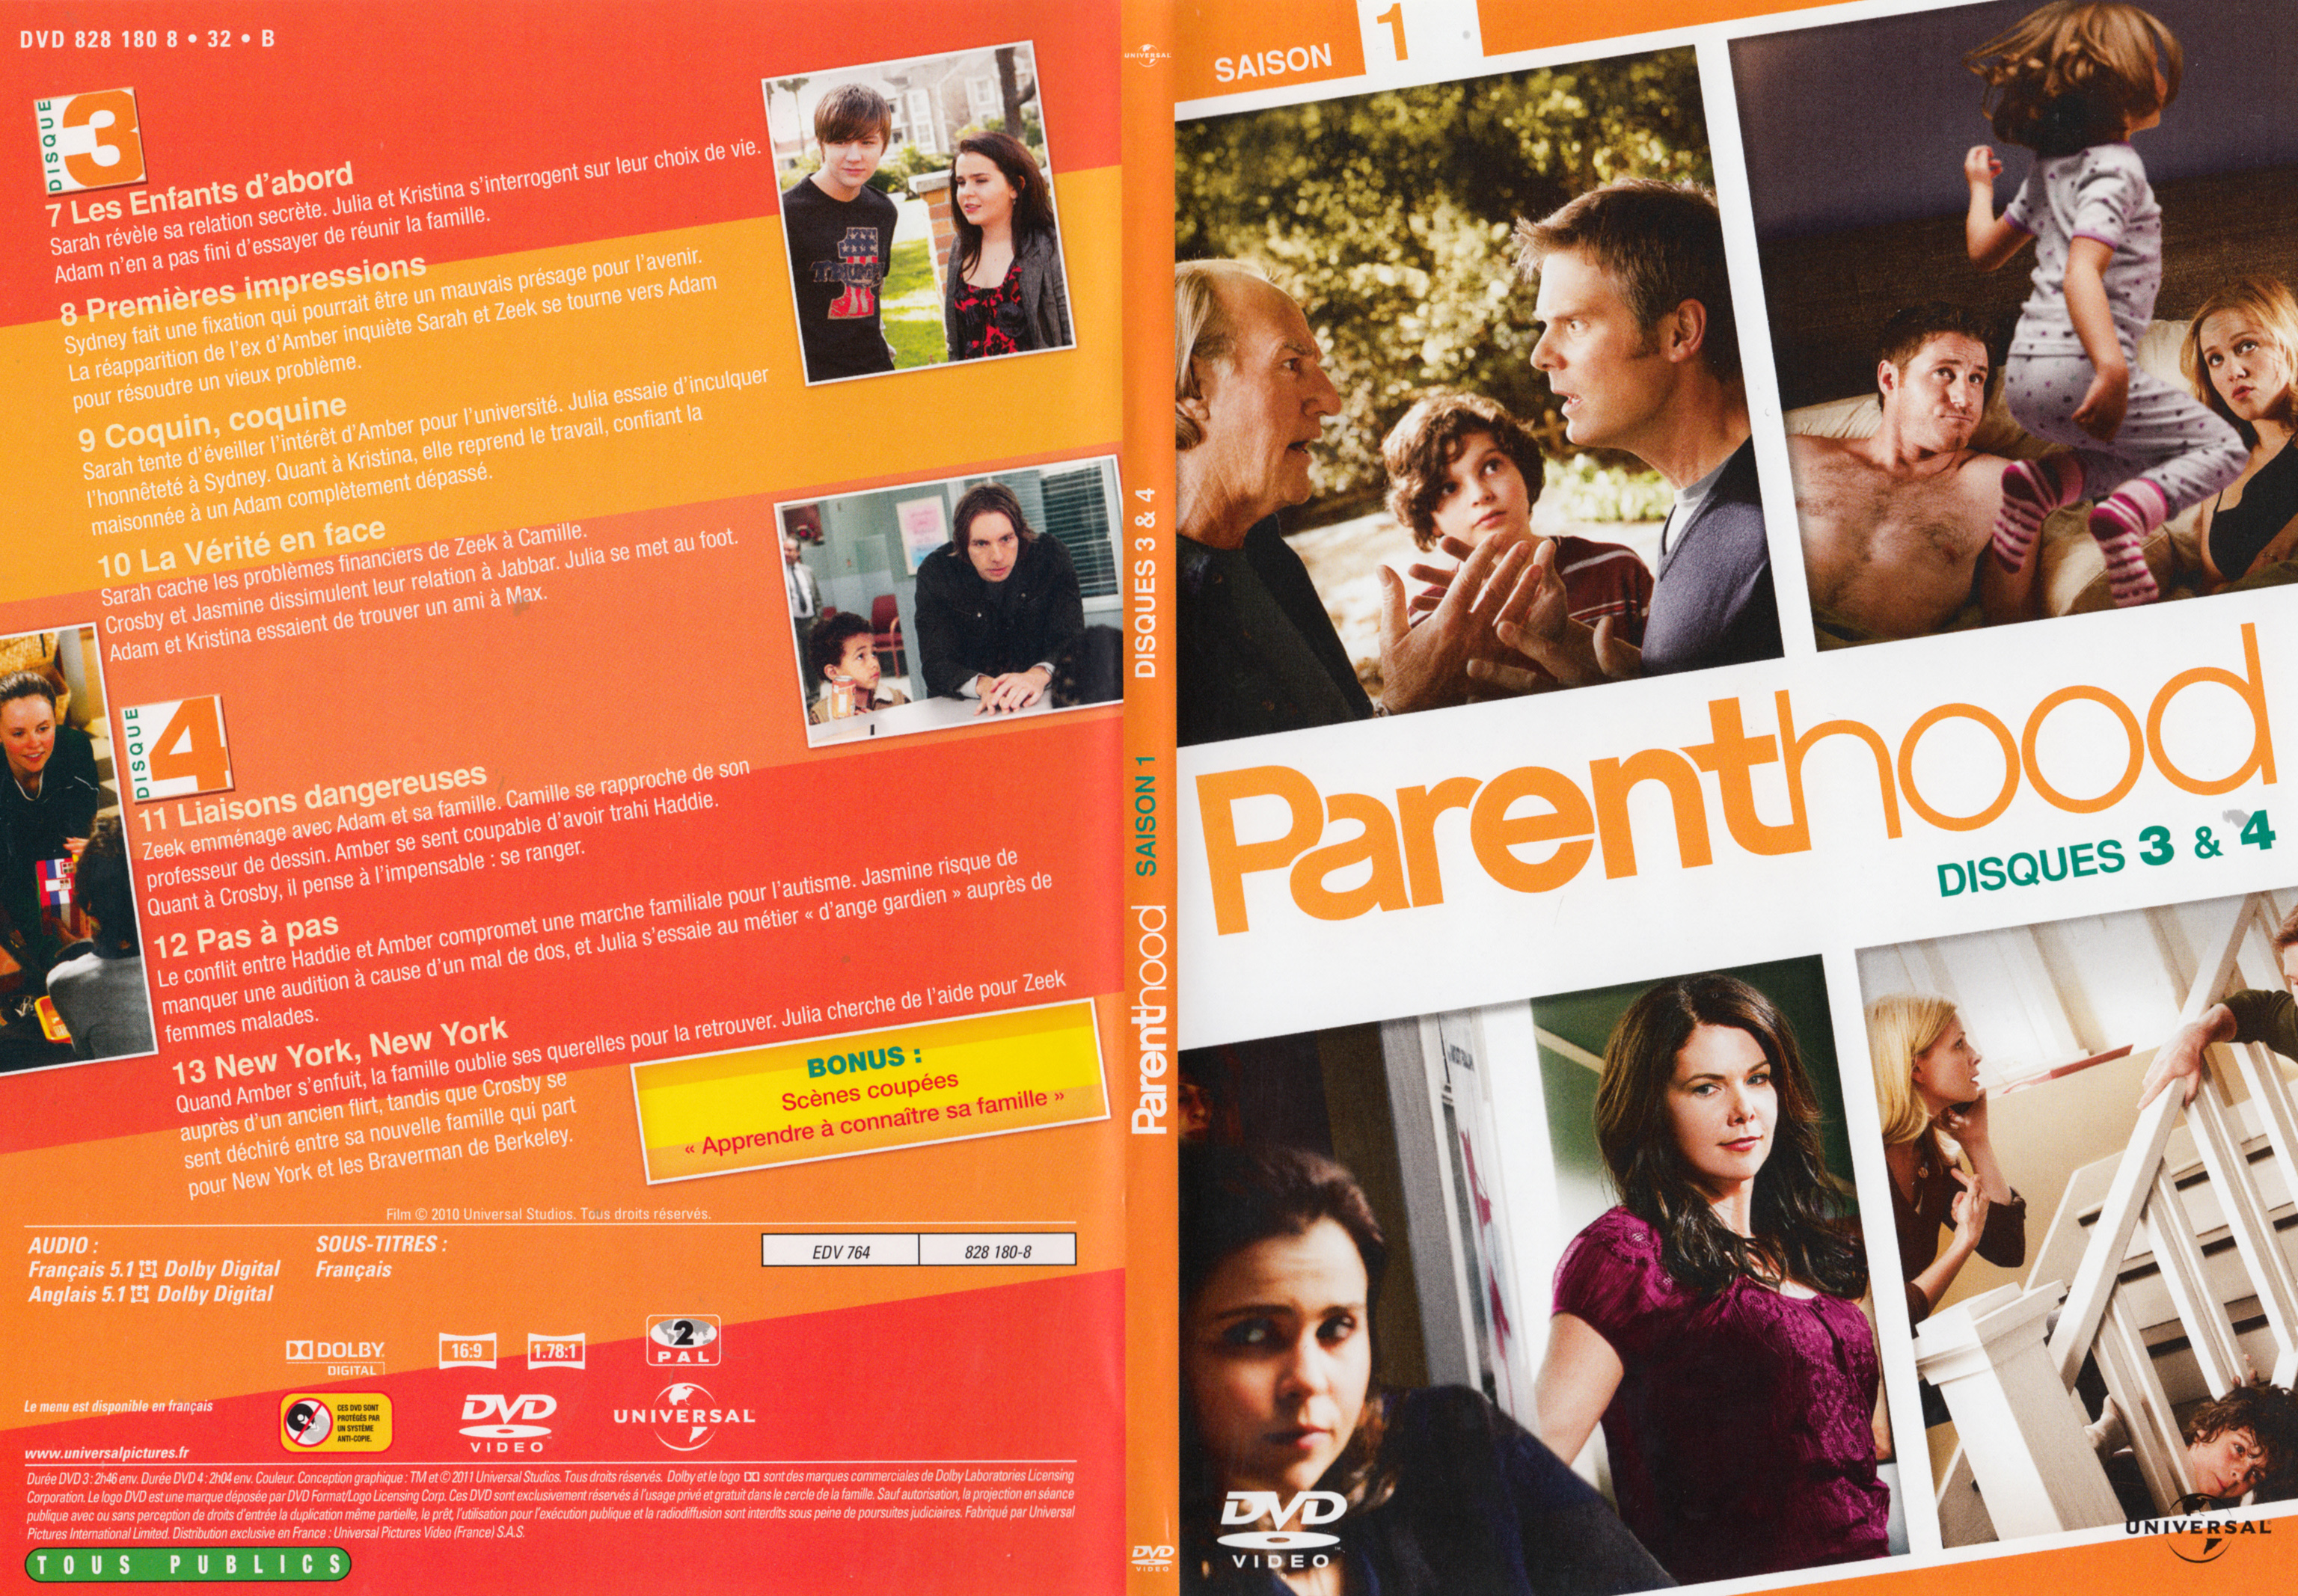 Jaquette DVD Parenthood Saison 1 DVD 2